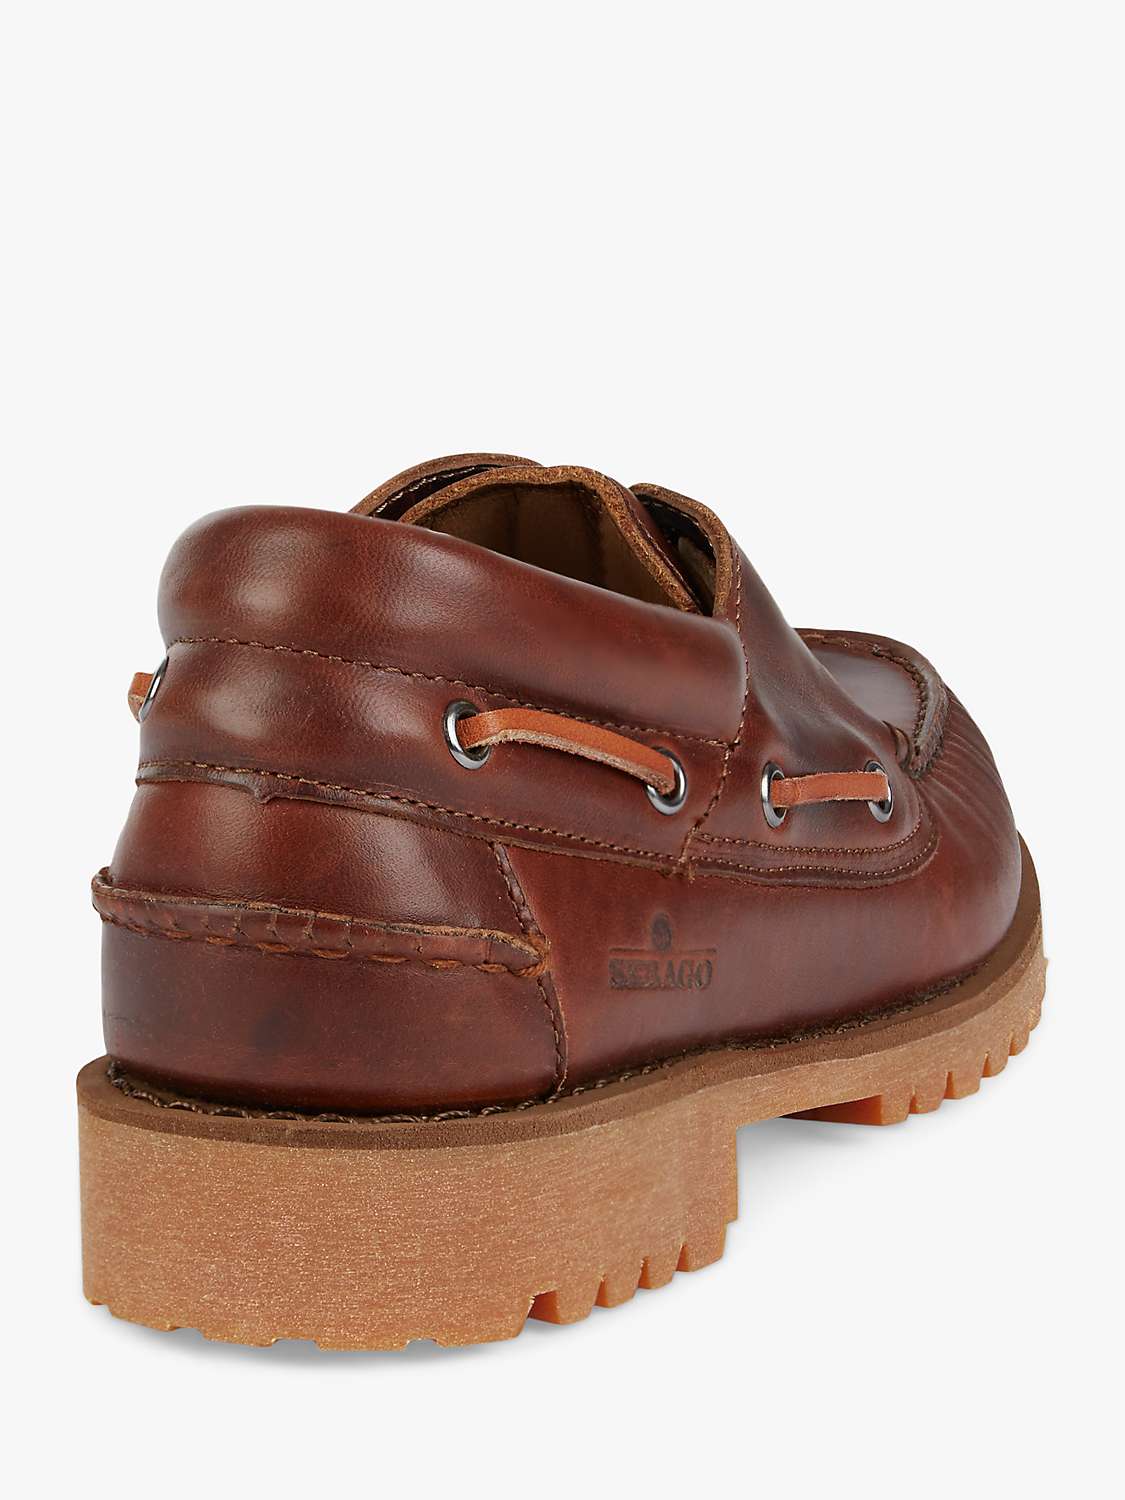 Buy Sebago Acadia Leather Boat Shoes Online at johnlewis.com